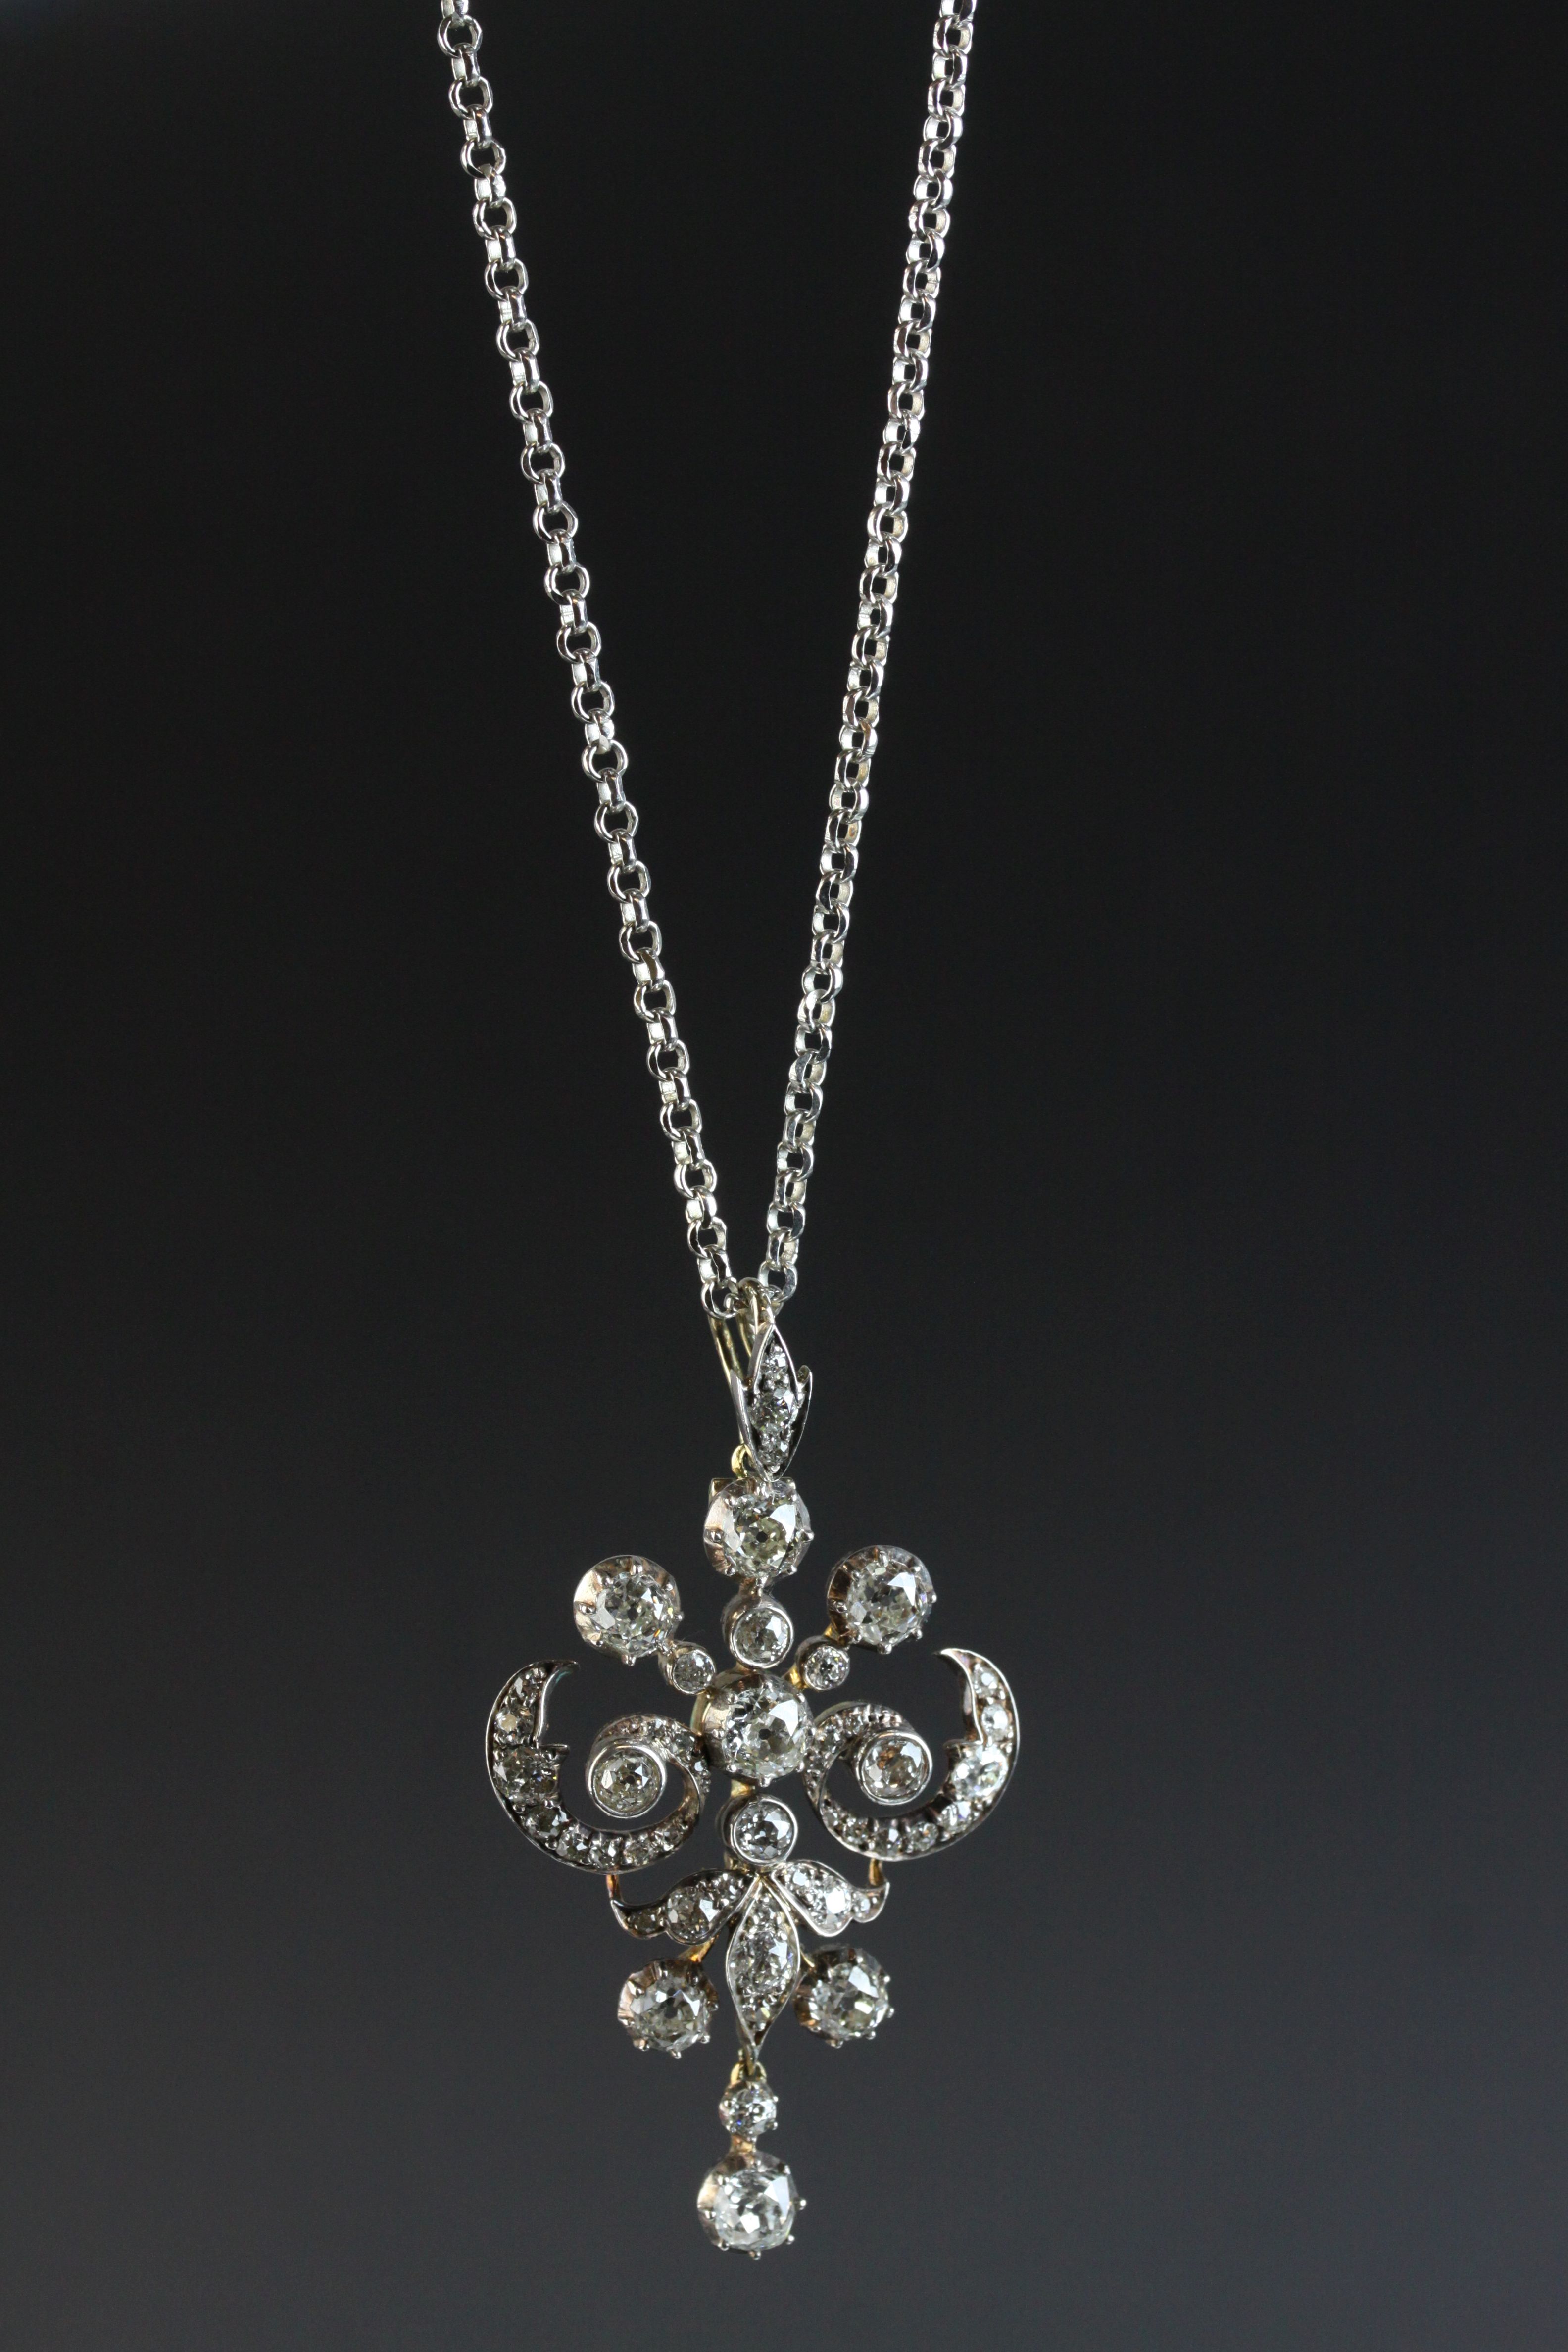 Victorian diamond pendant necklace with dropper, scroll design, the principle old round brilliant - Image 2 of 8